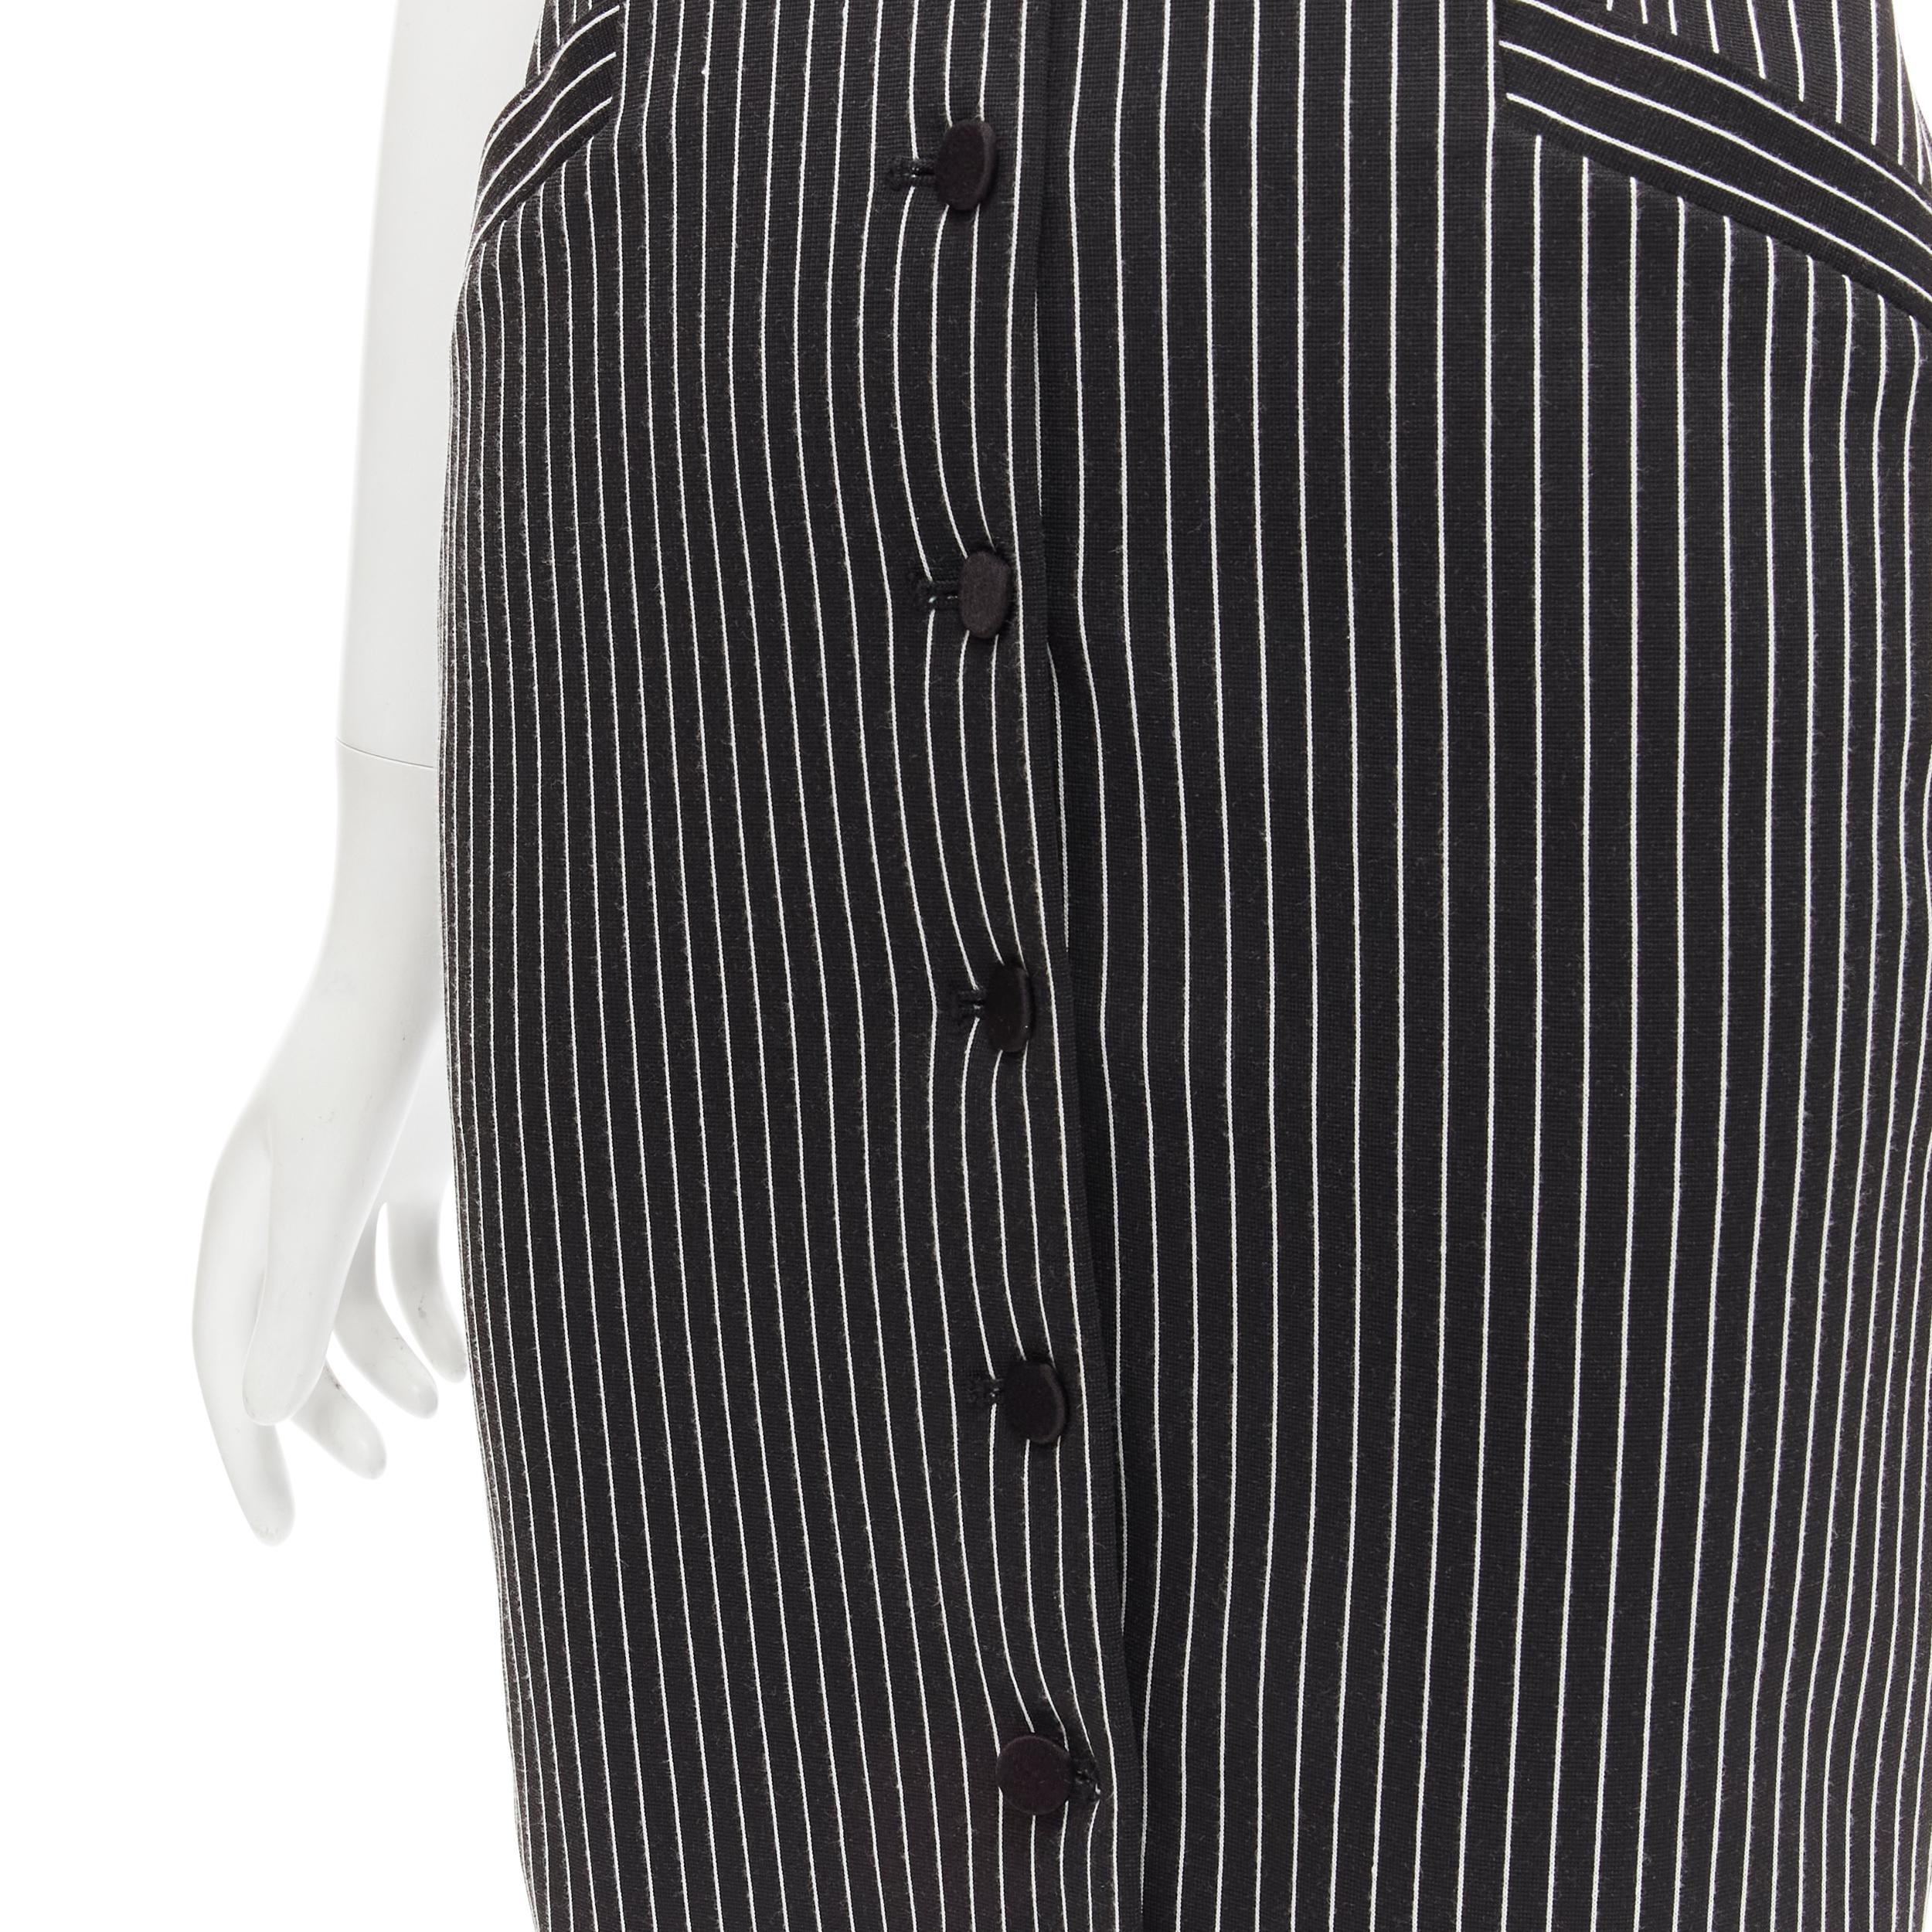 DIANE VON FURSTENBERG Gilet Dress black white vertical pinstripes dress US0 XS For Sale 4